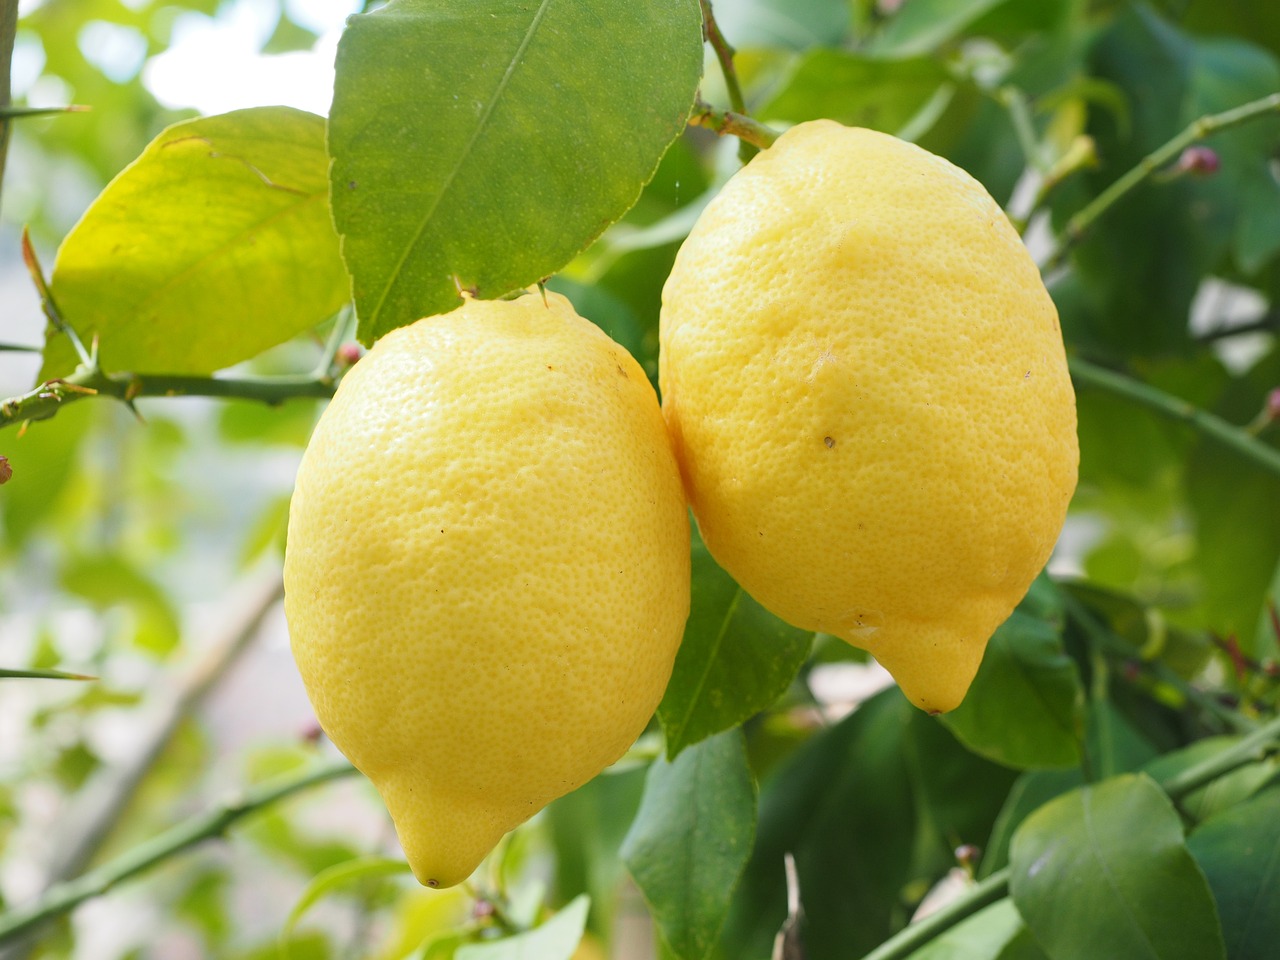 beautiful lemons hanging from trees